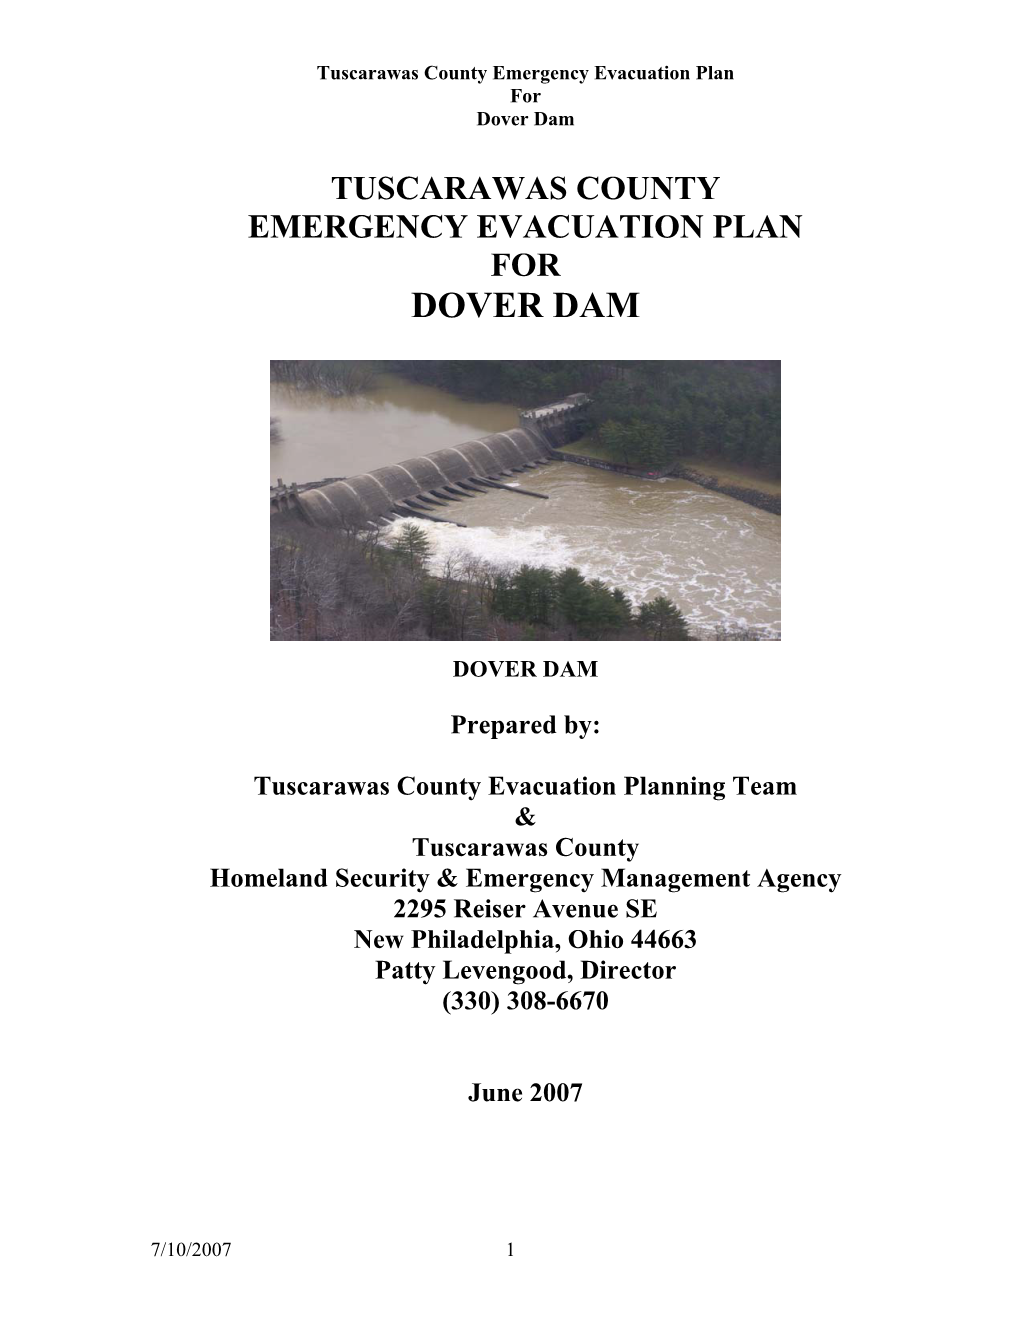 Emergency Evacuation Plan for Dover Dam